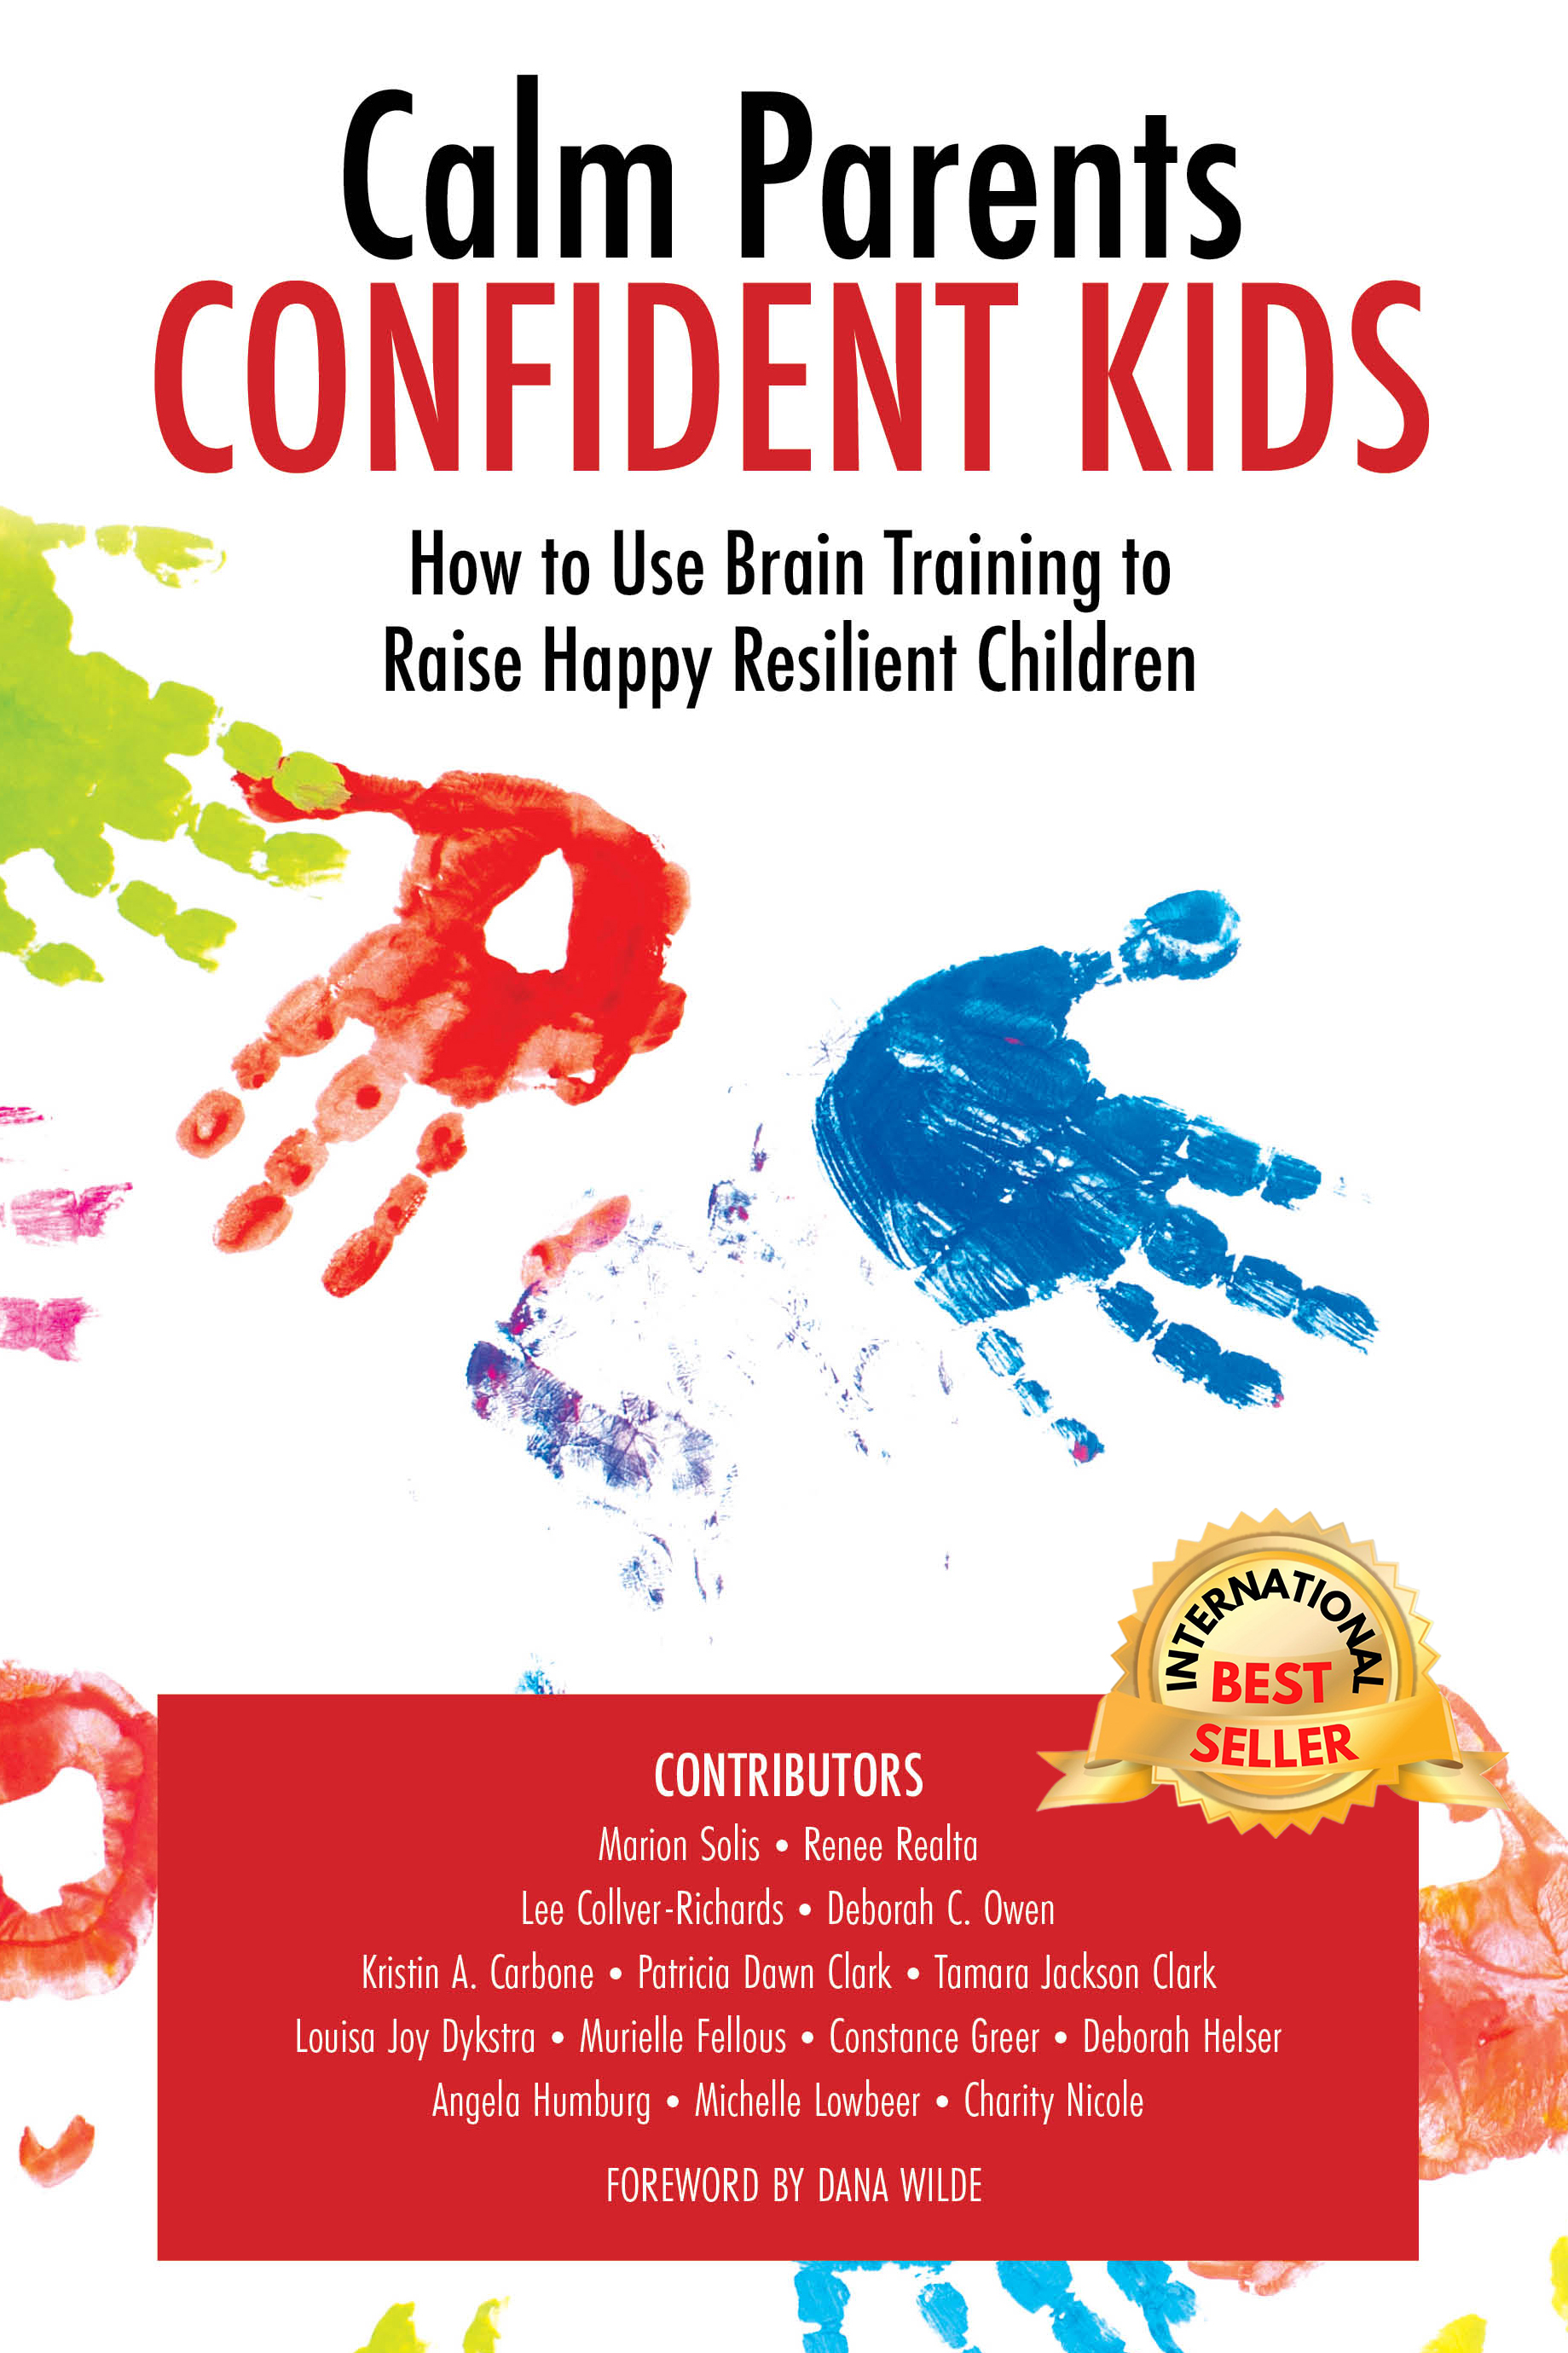 Calm Parents Confident Kids by Lee Collver Richards _ Spotlight Publishing House